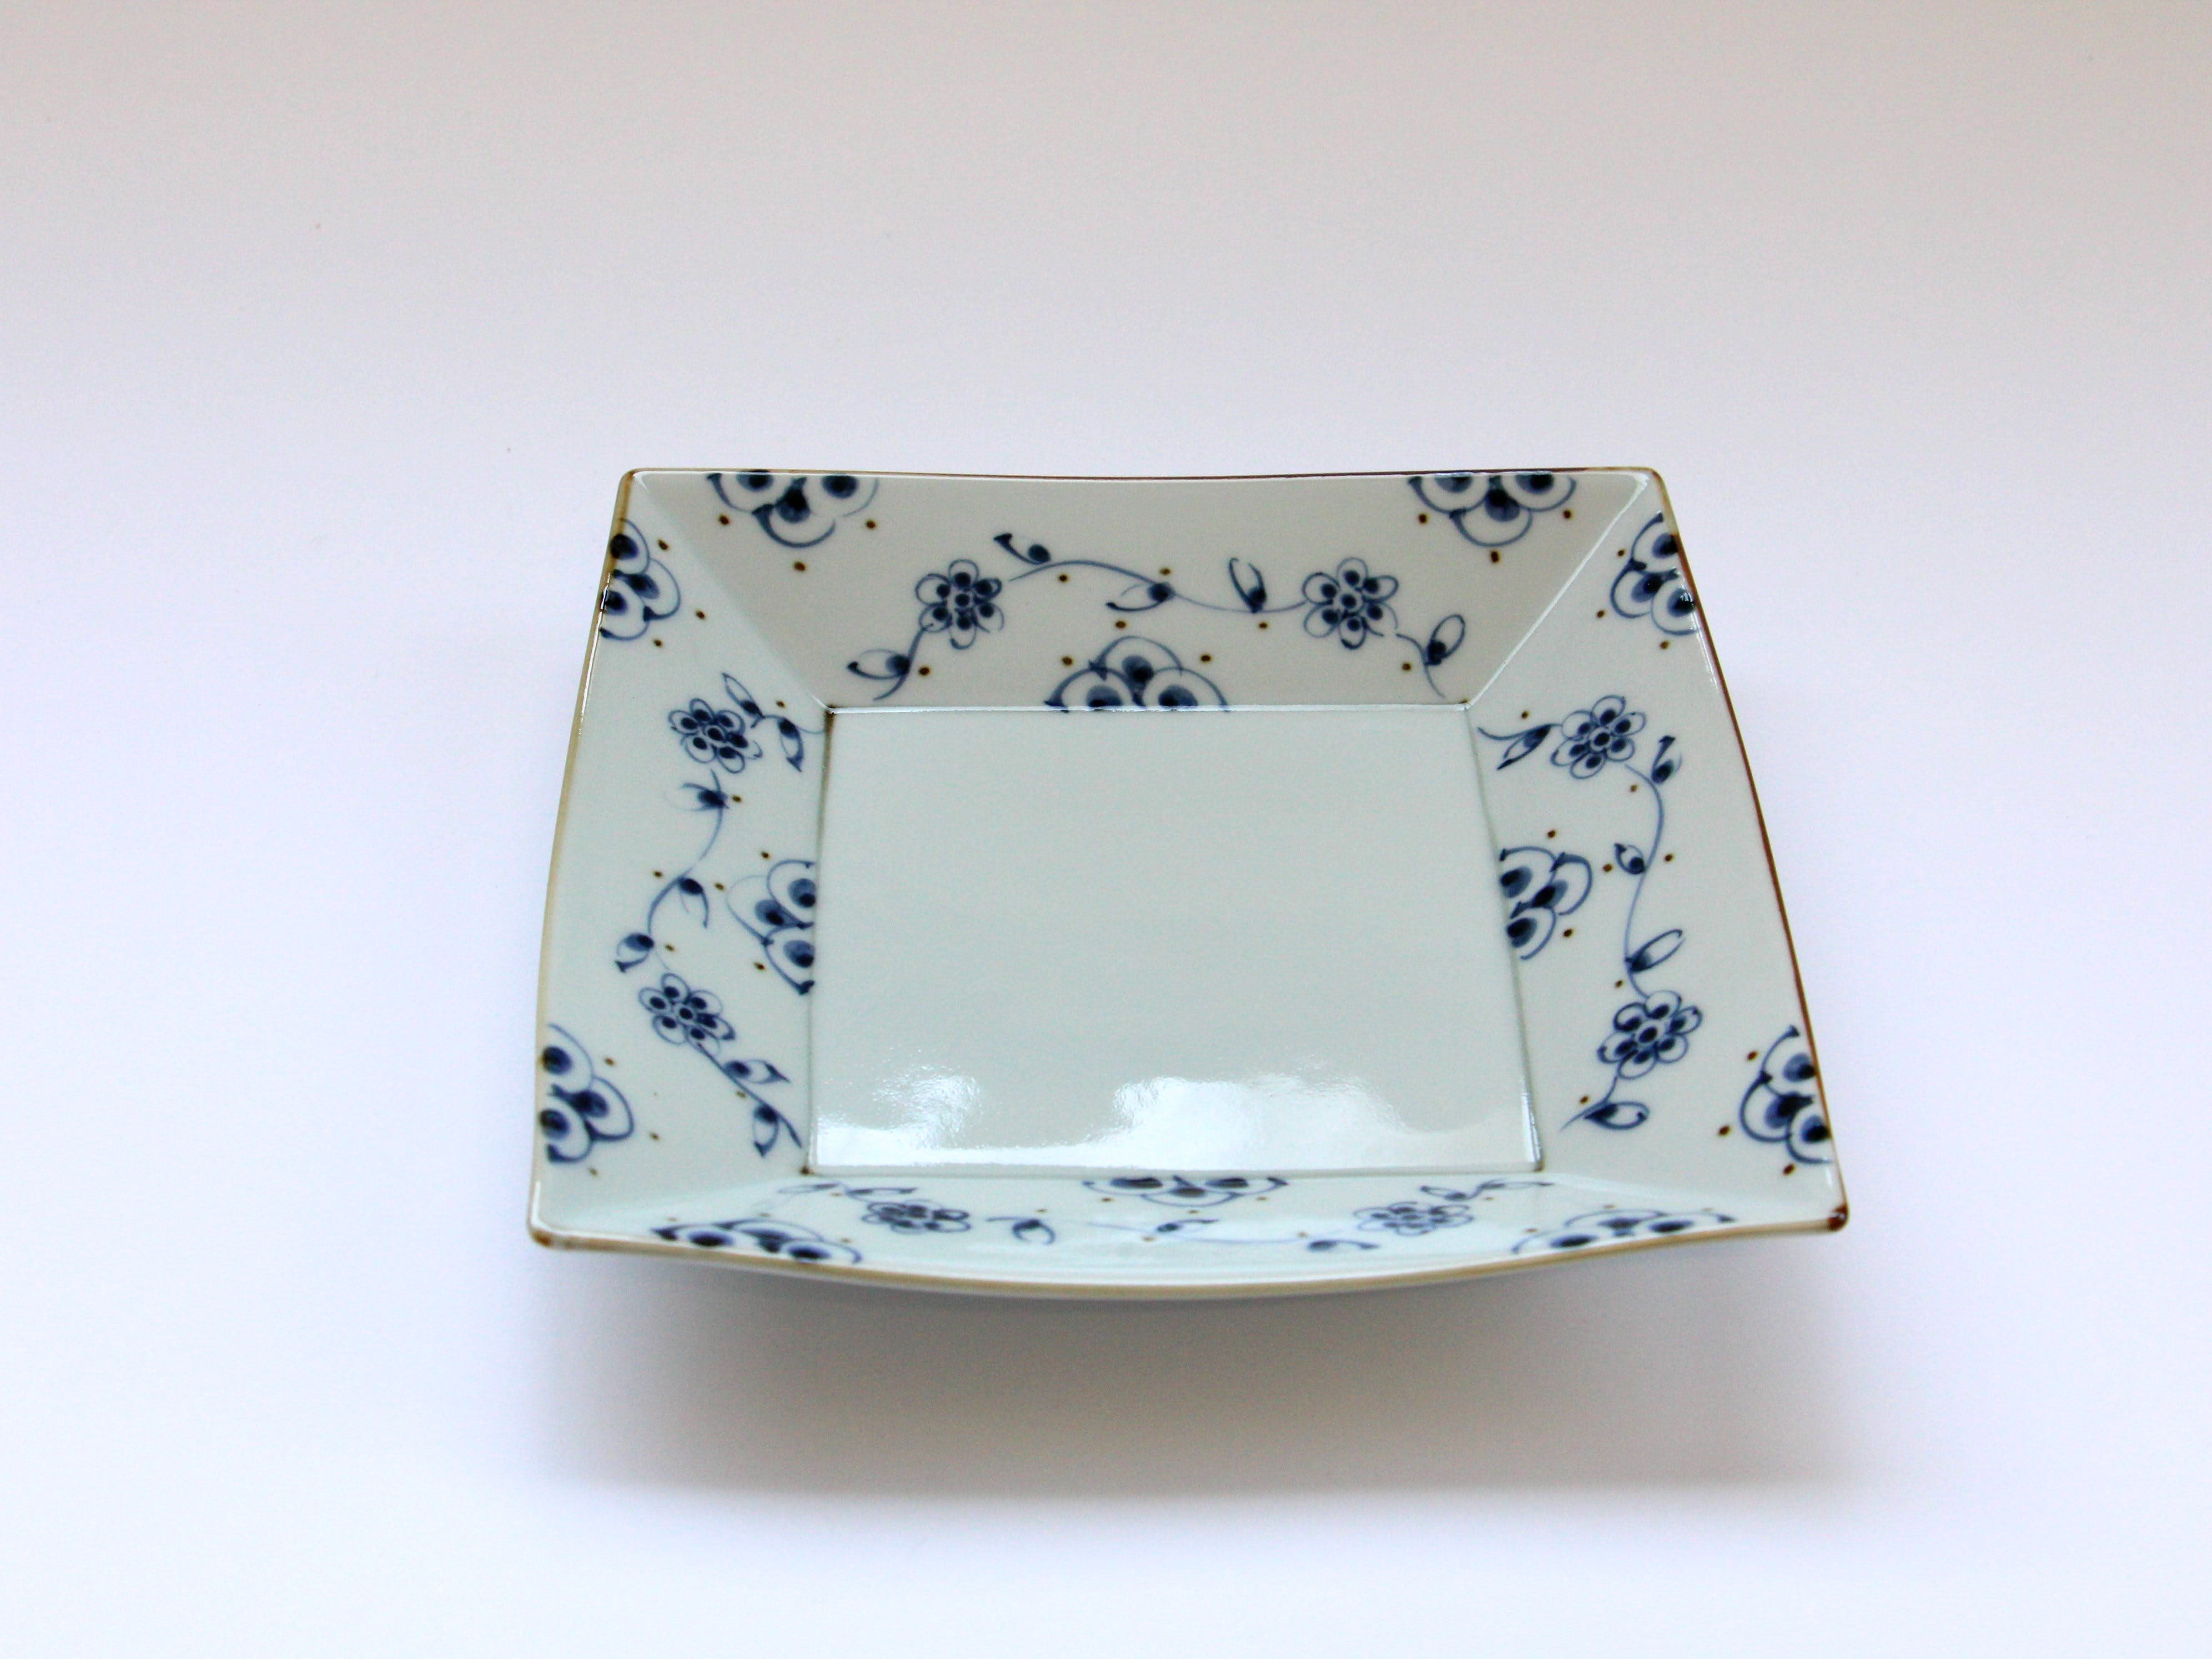 Tsuruka arabesque 5.5 inch square plate [Tokushichigama]